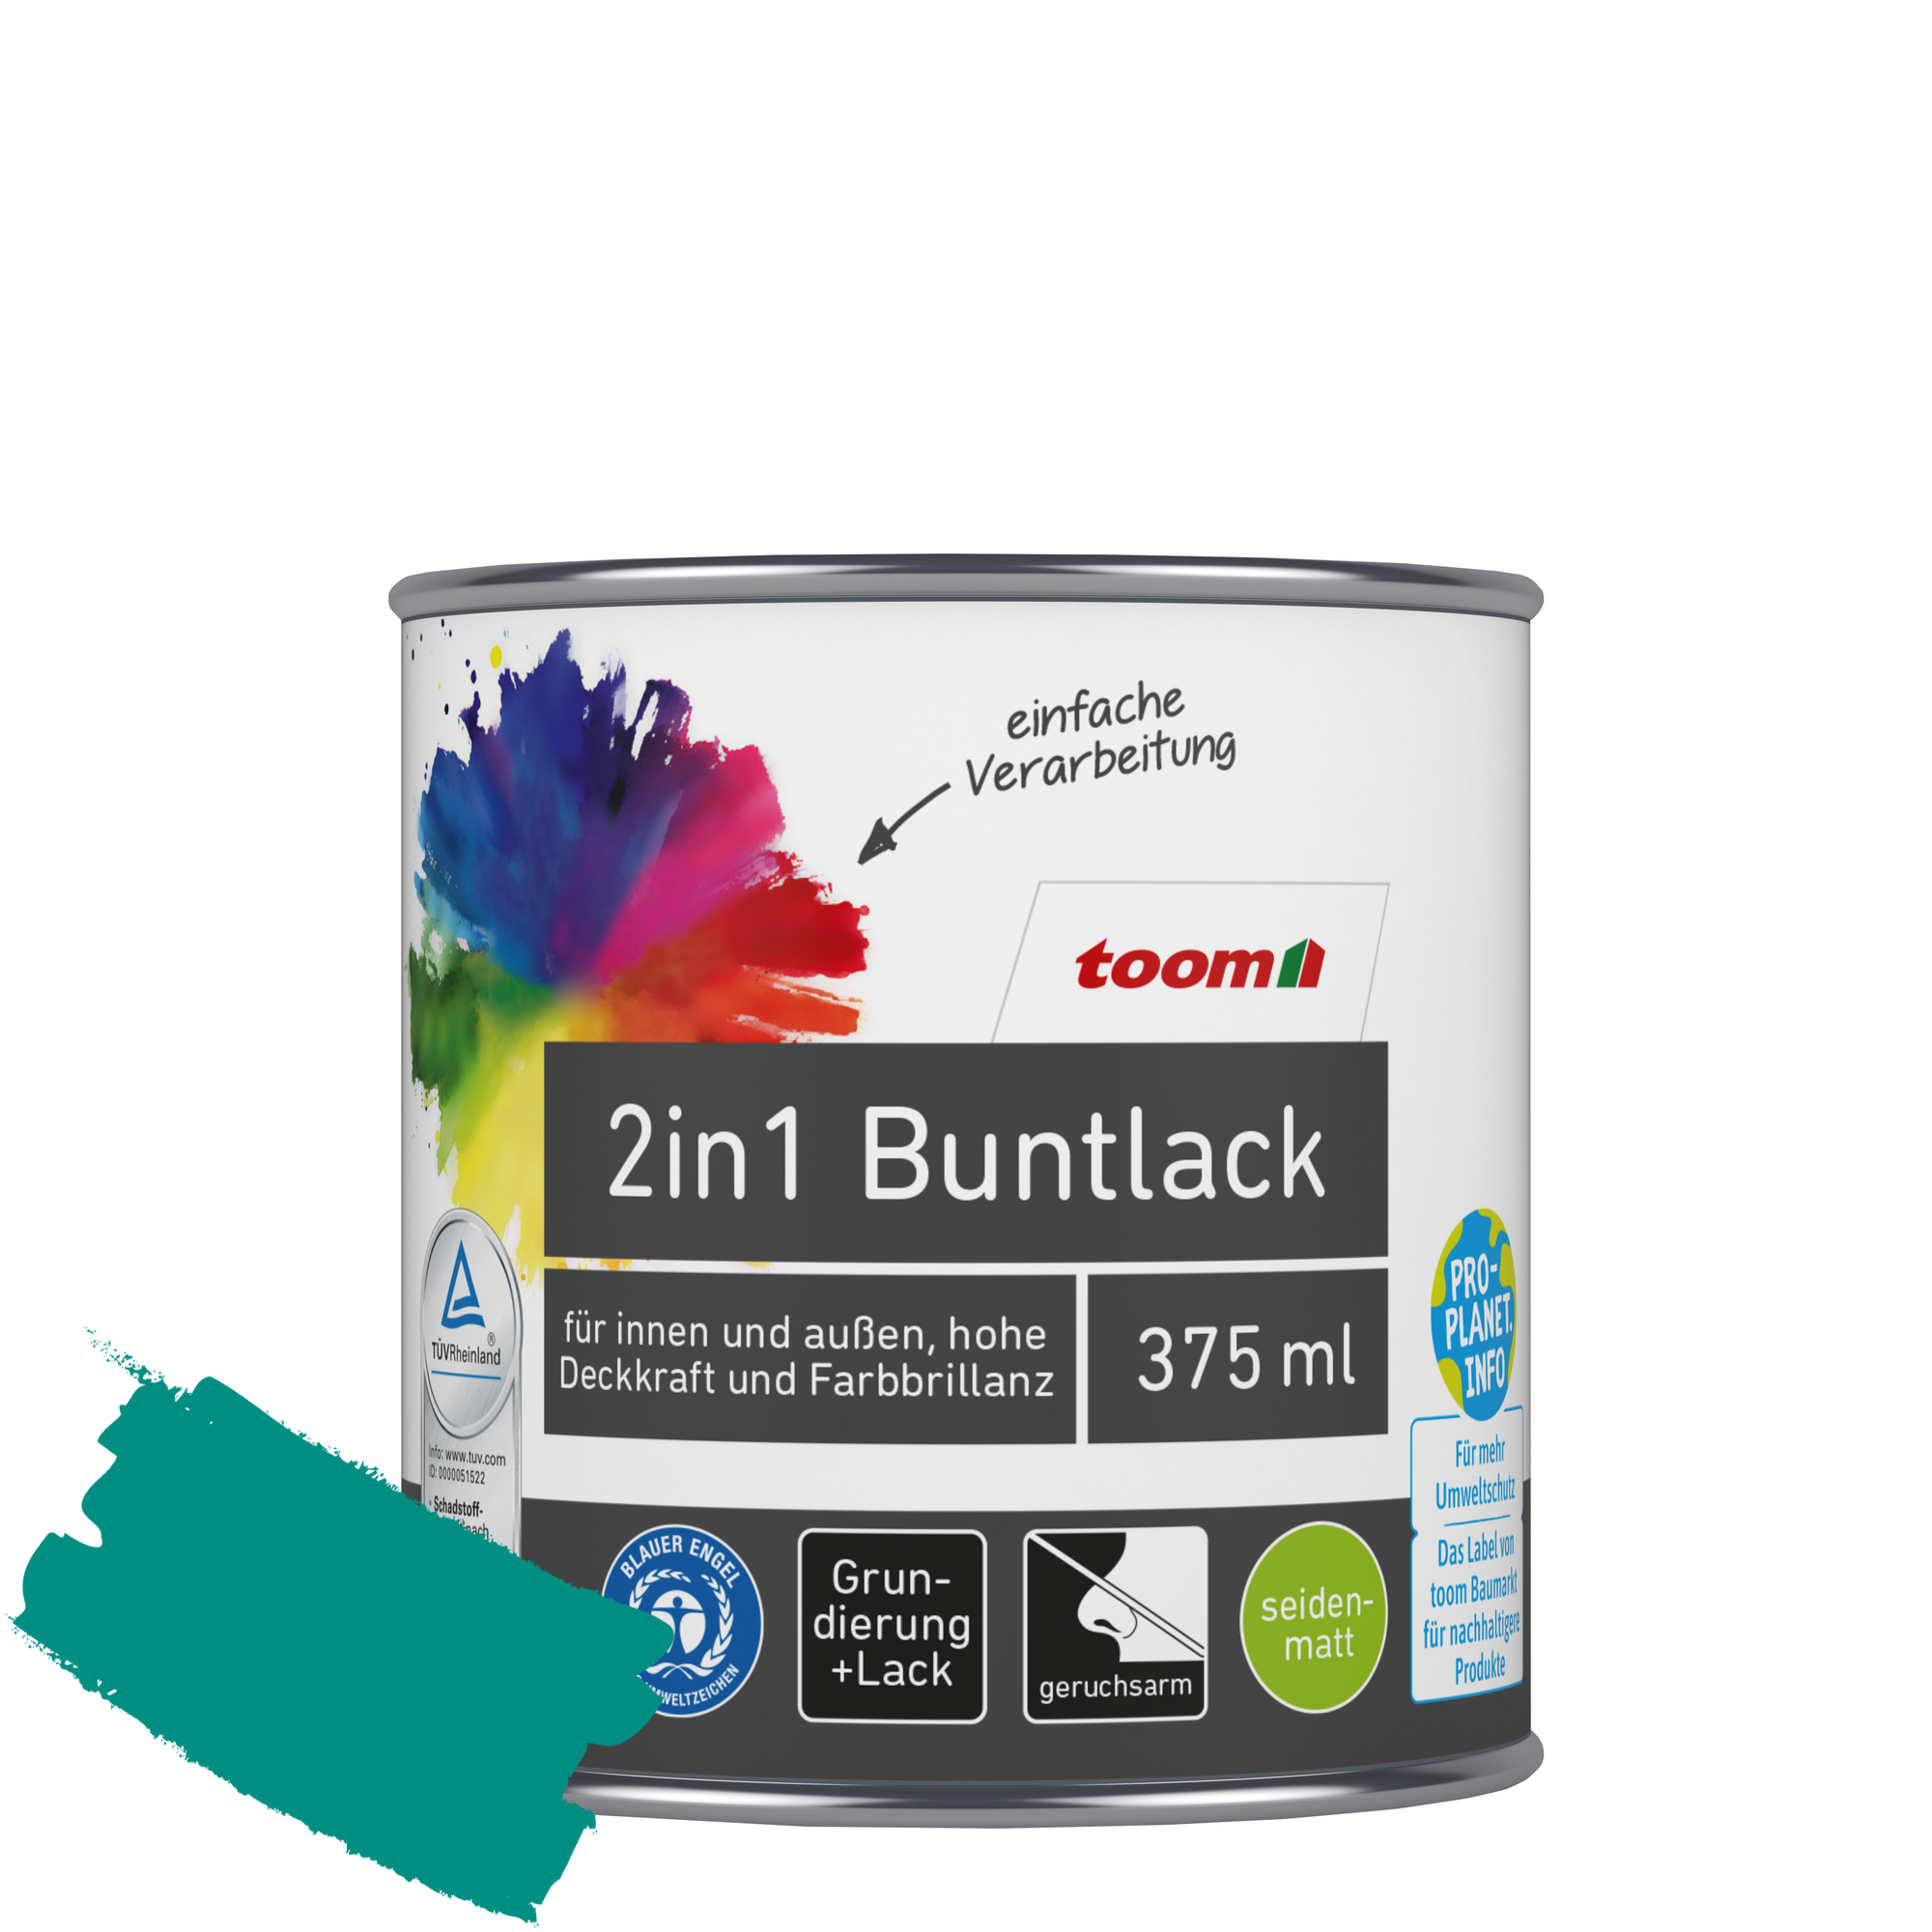 2in1 Buntlack 'Südseetraum' petrolfarben seidenmatt 375 ml + product picture